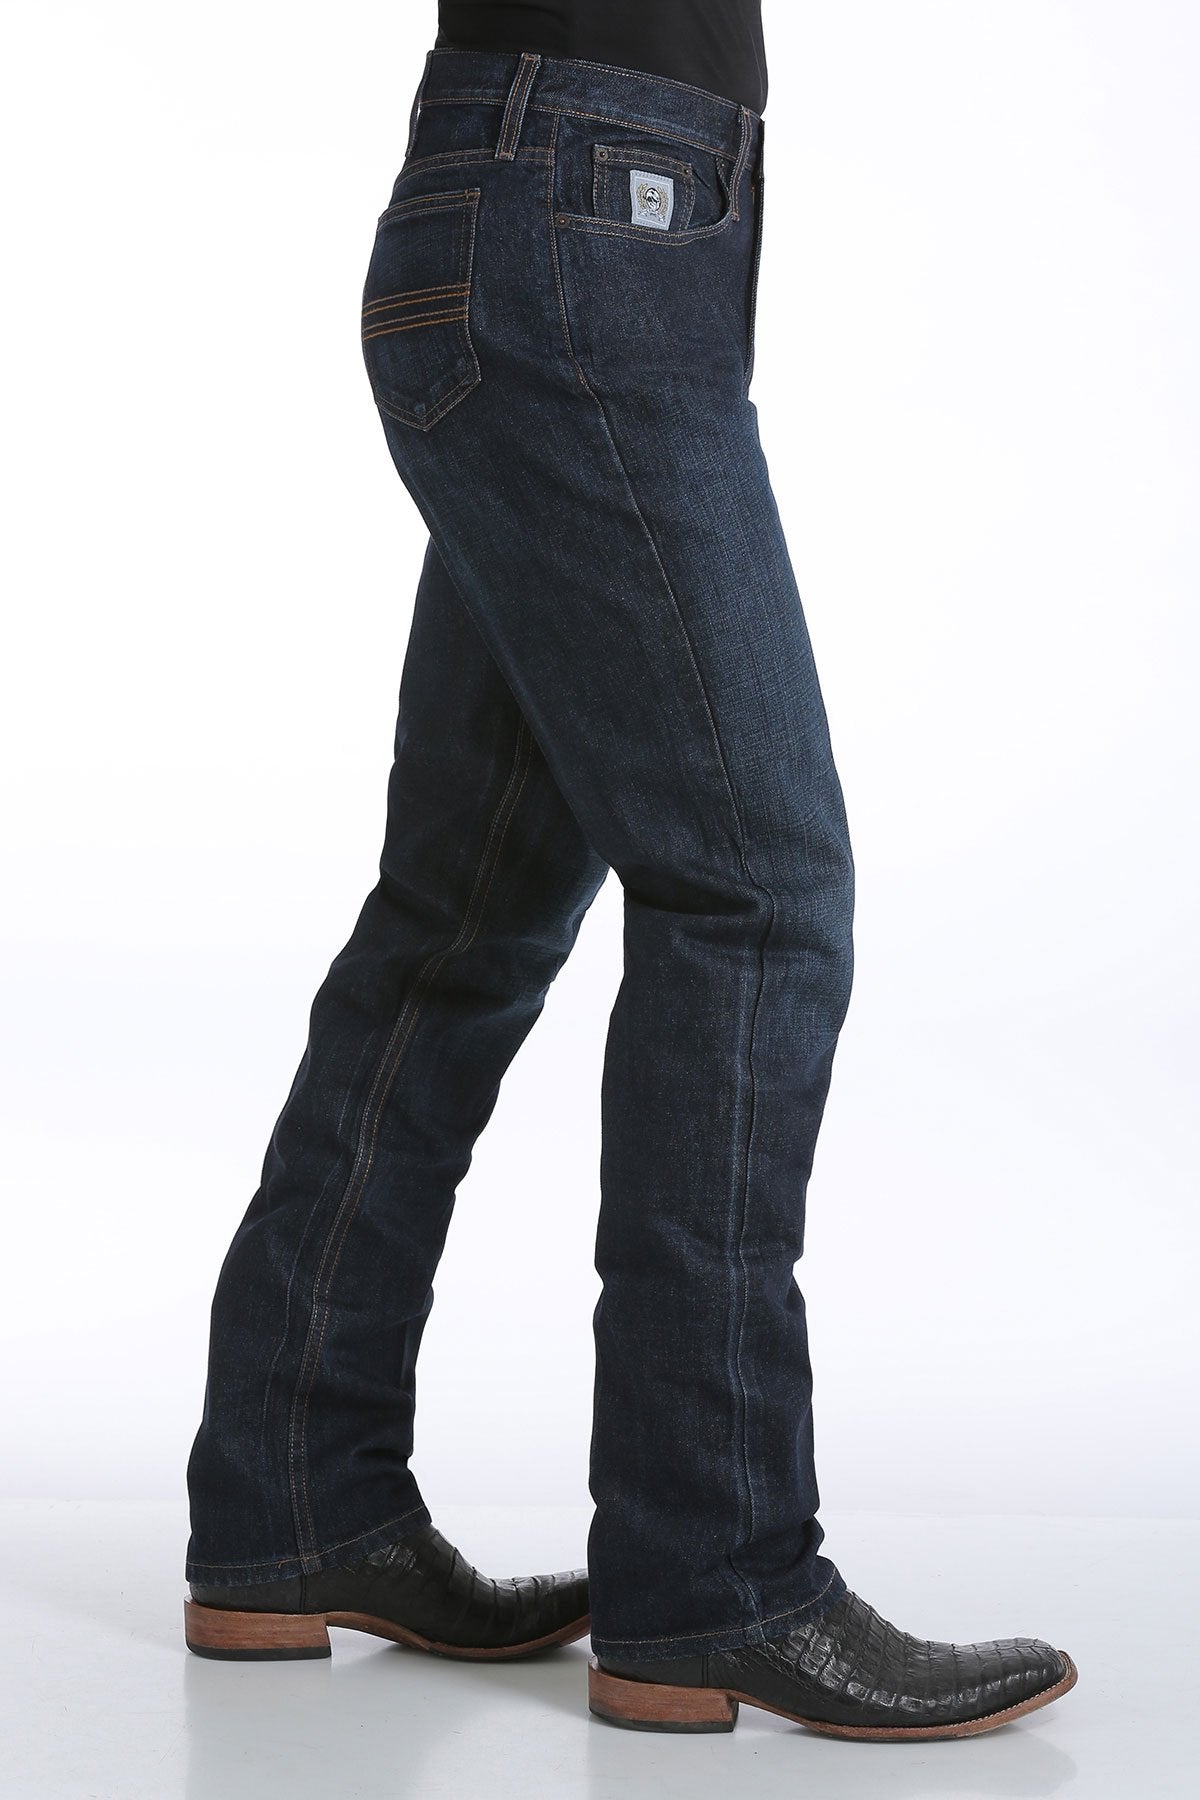 Cinch Silver Label Jeans - MB98034002 IND - 34 Leg